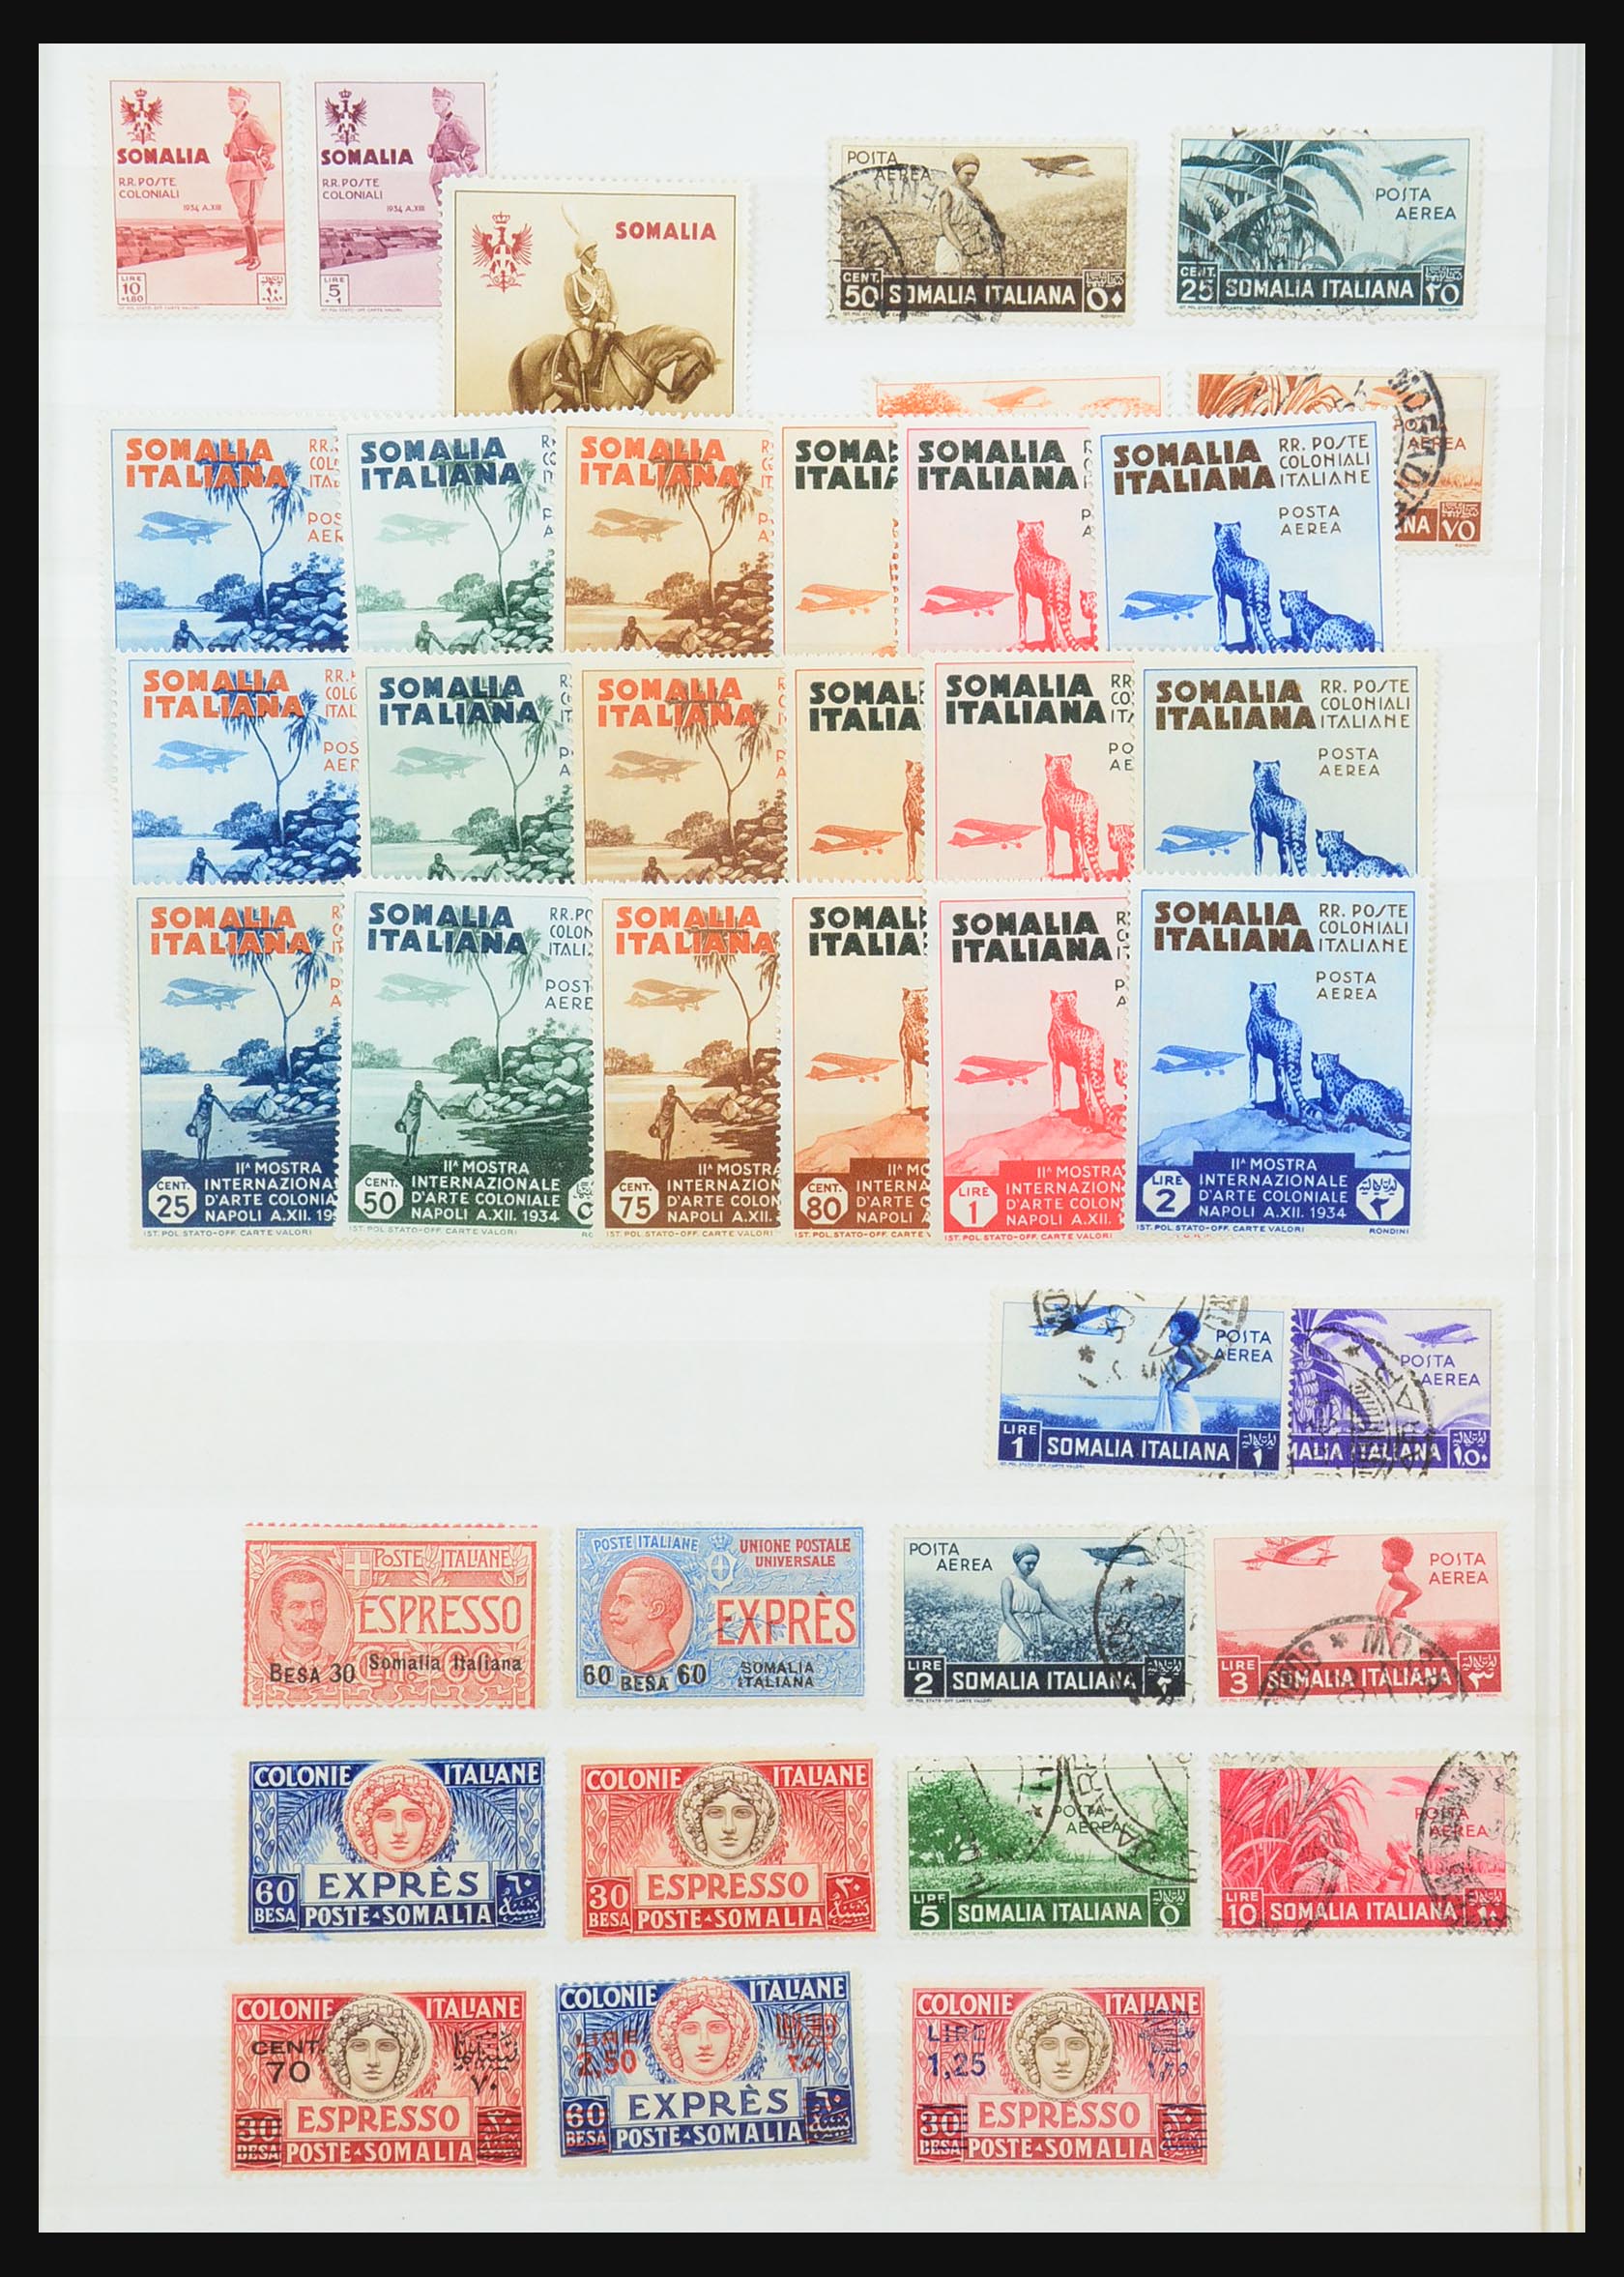 31407 019 - 31407 Triest and Somalia 1903-1954.